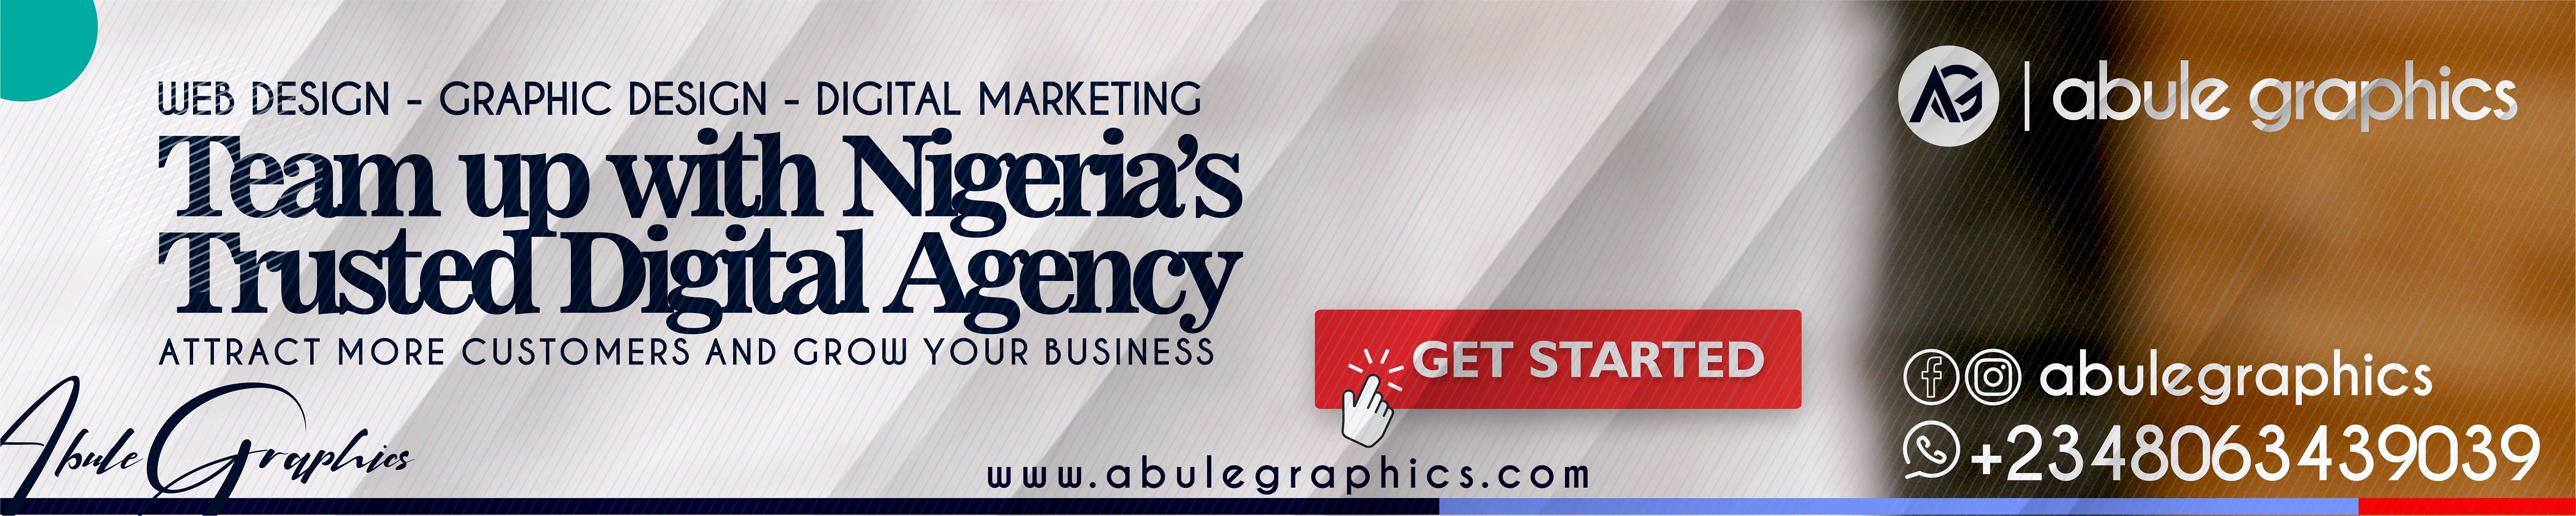 contact the best web designer in abuja digital marketing agency in abuja nigeria